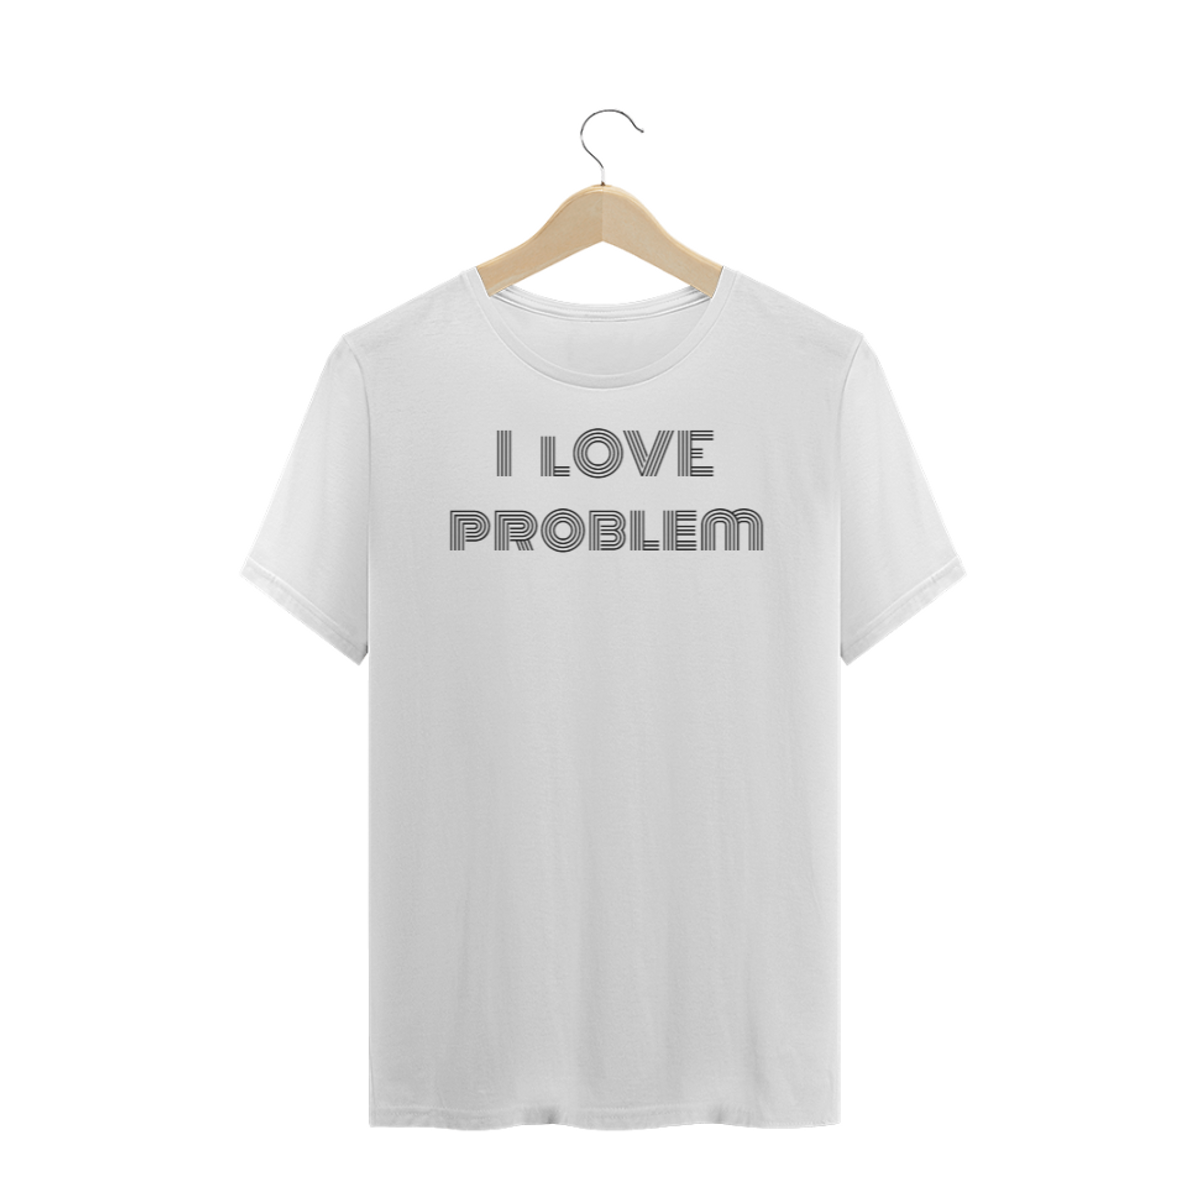 Nome do produtoT-Shirt Masculina - I LOVE PROMEM